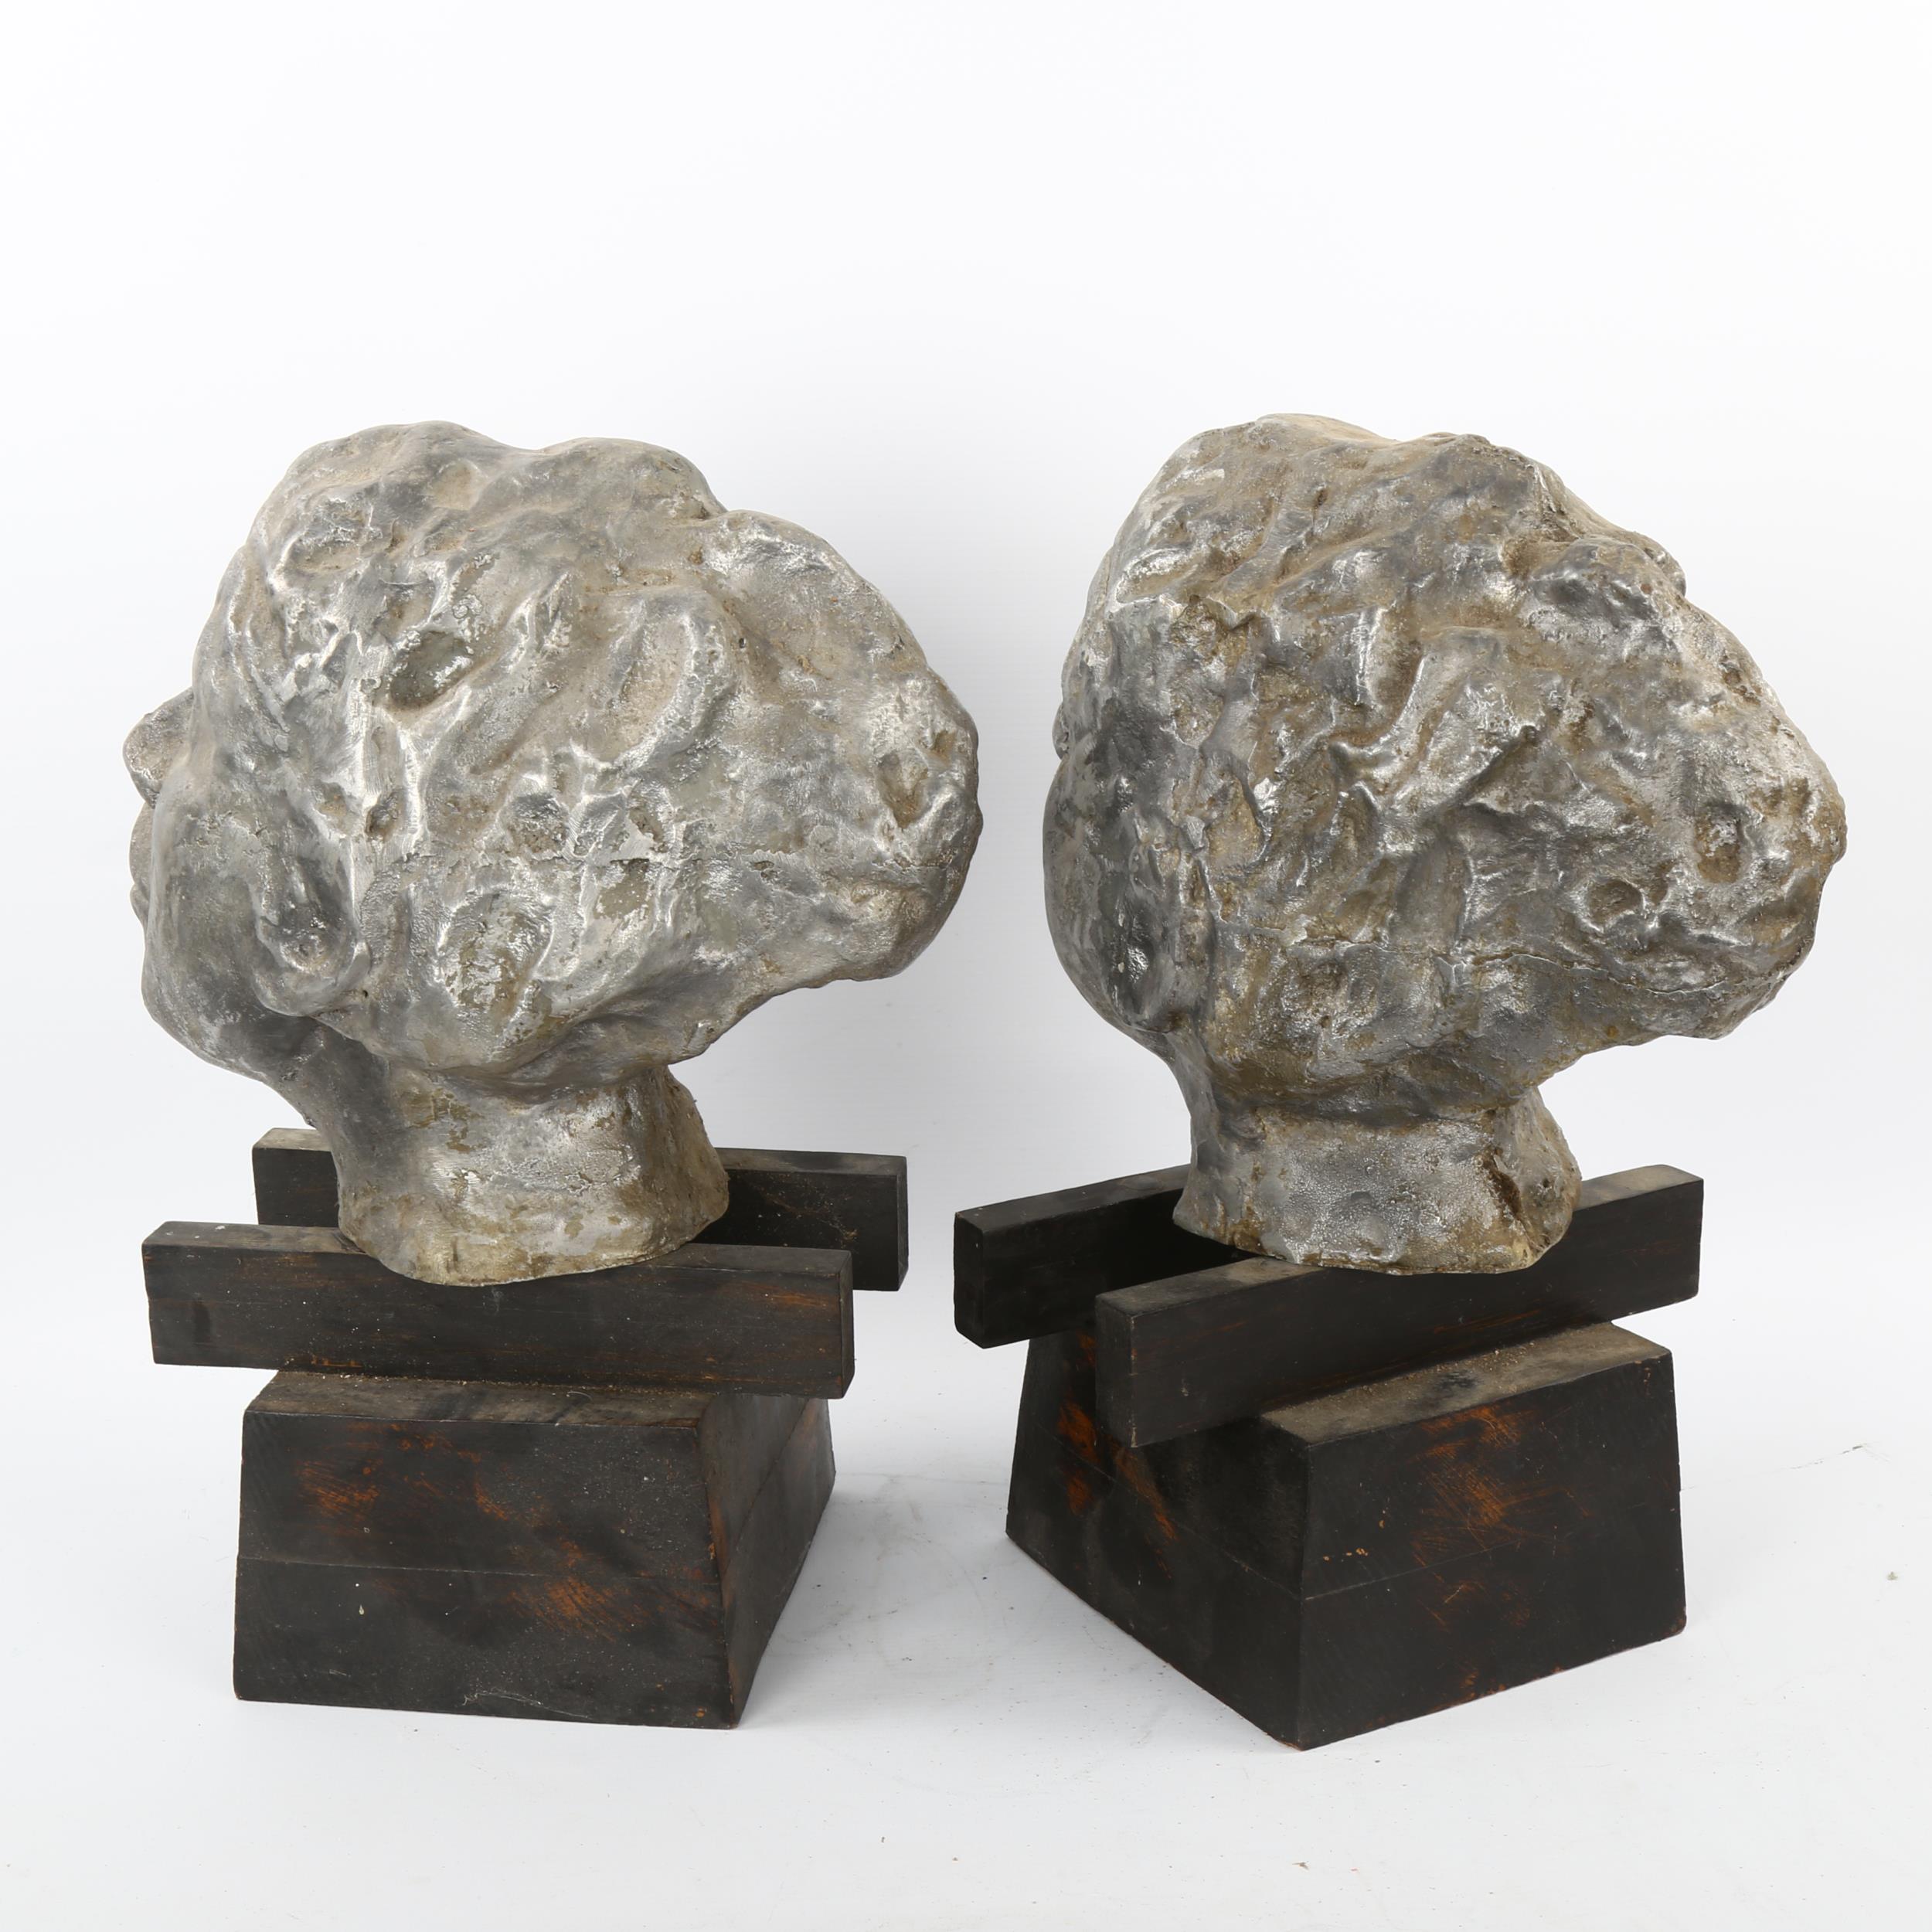 Alan Grimwood, 3 life-size cast aluminium head sculptures, 2 mounted on woodblock plinths (3) - Image 3 of 3